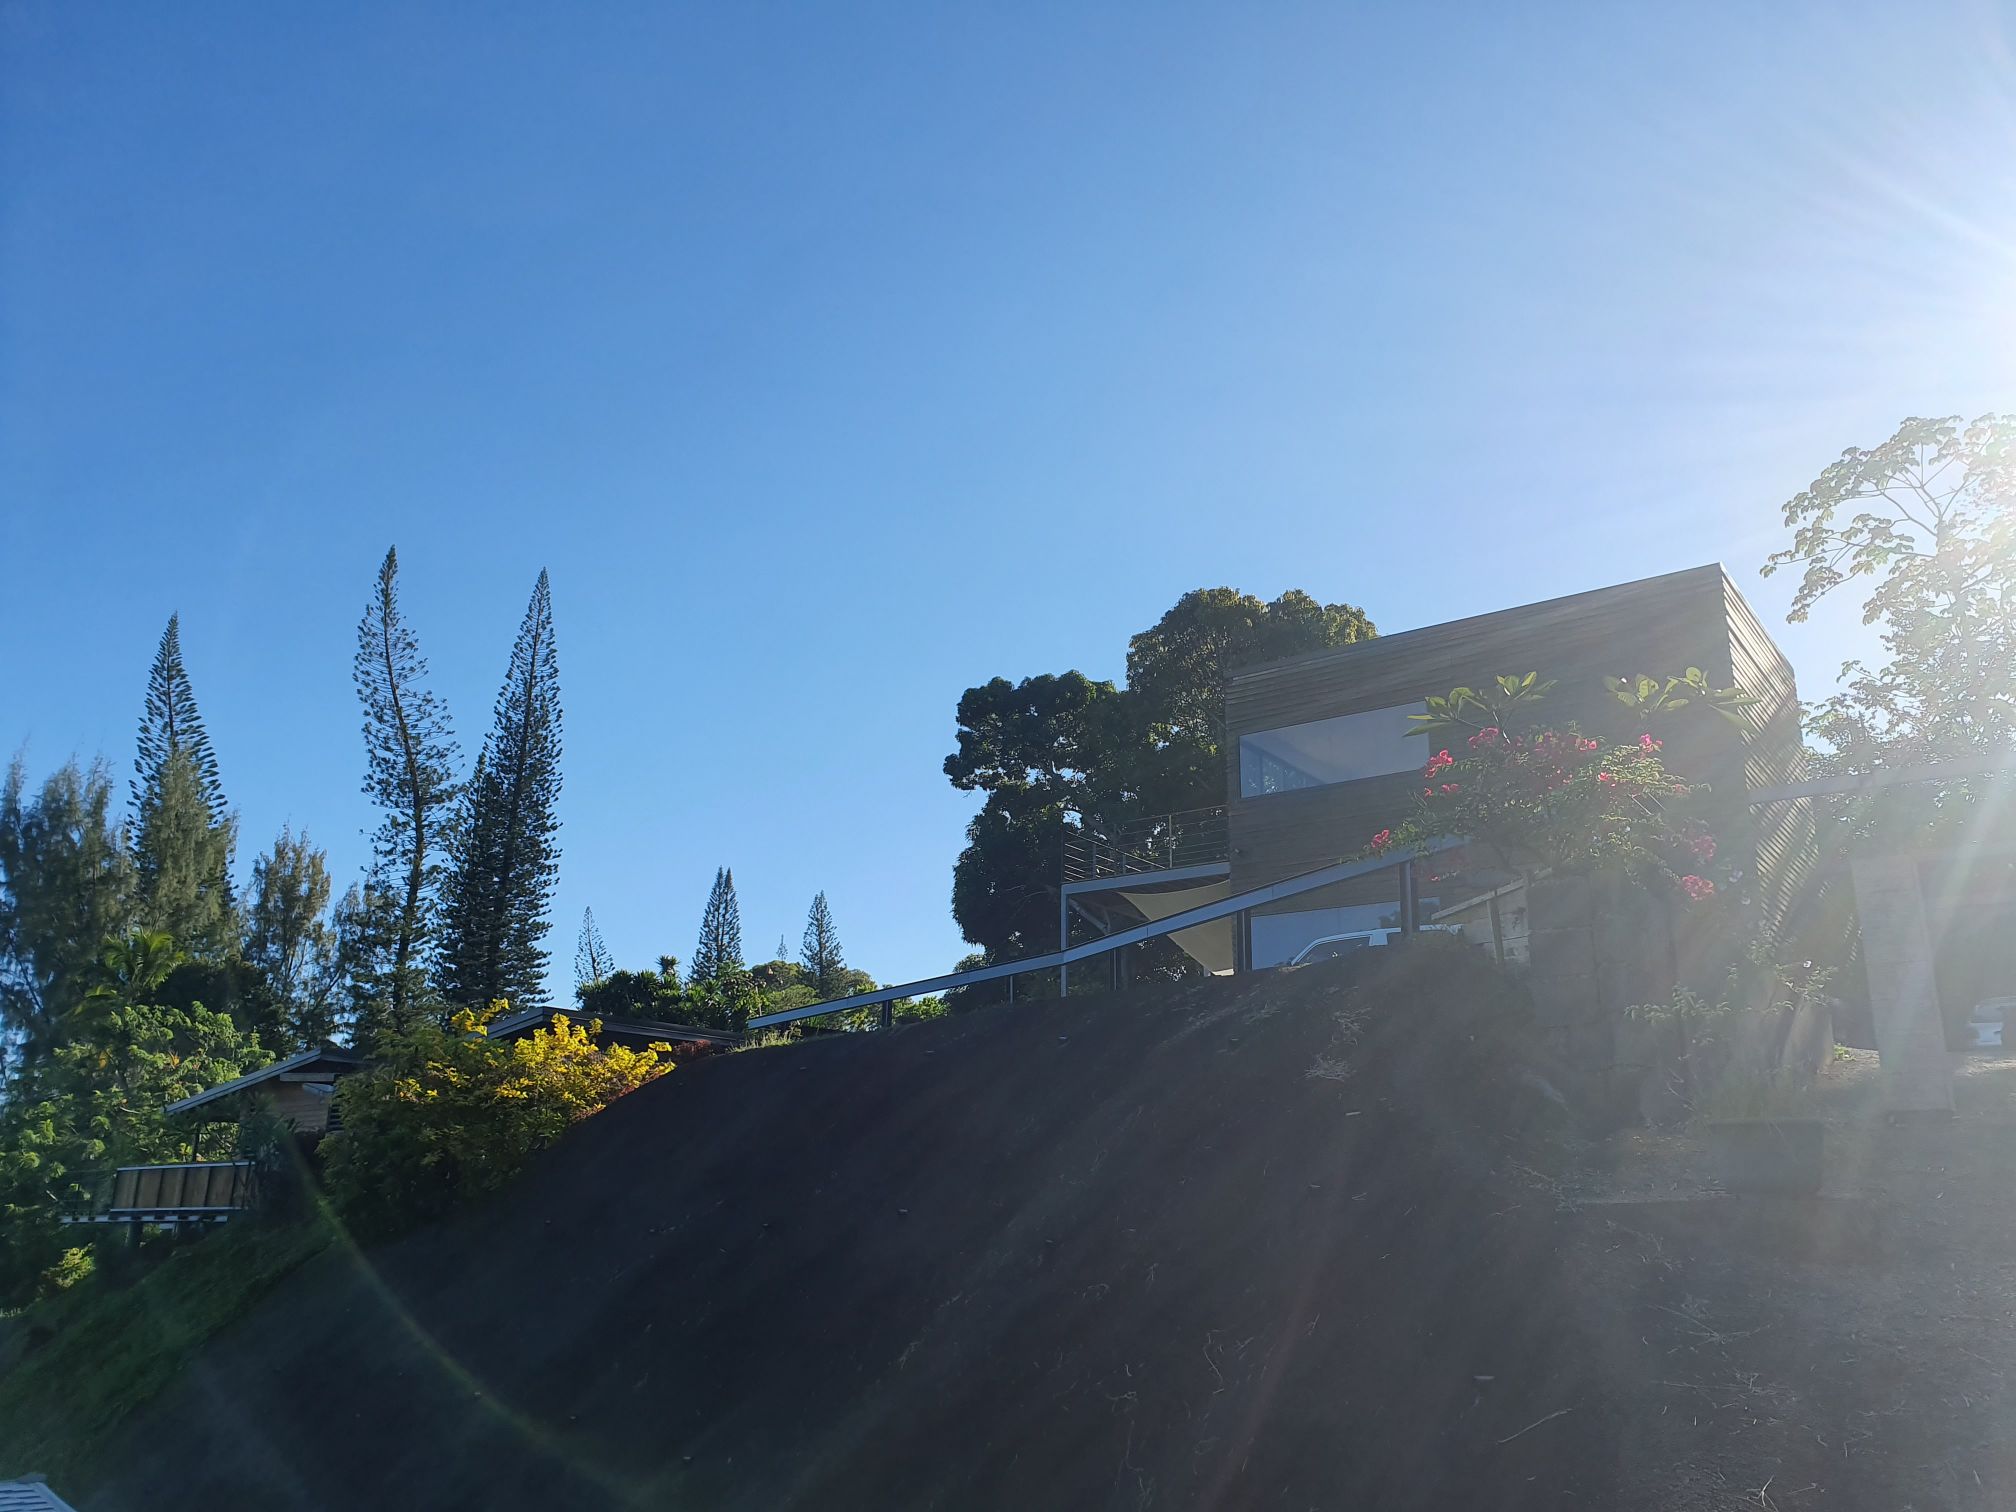 Bounty Lodge Tahiti, accommodation rentals for holidays in Tahiti